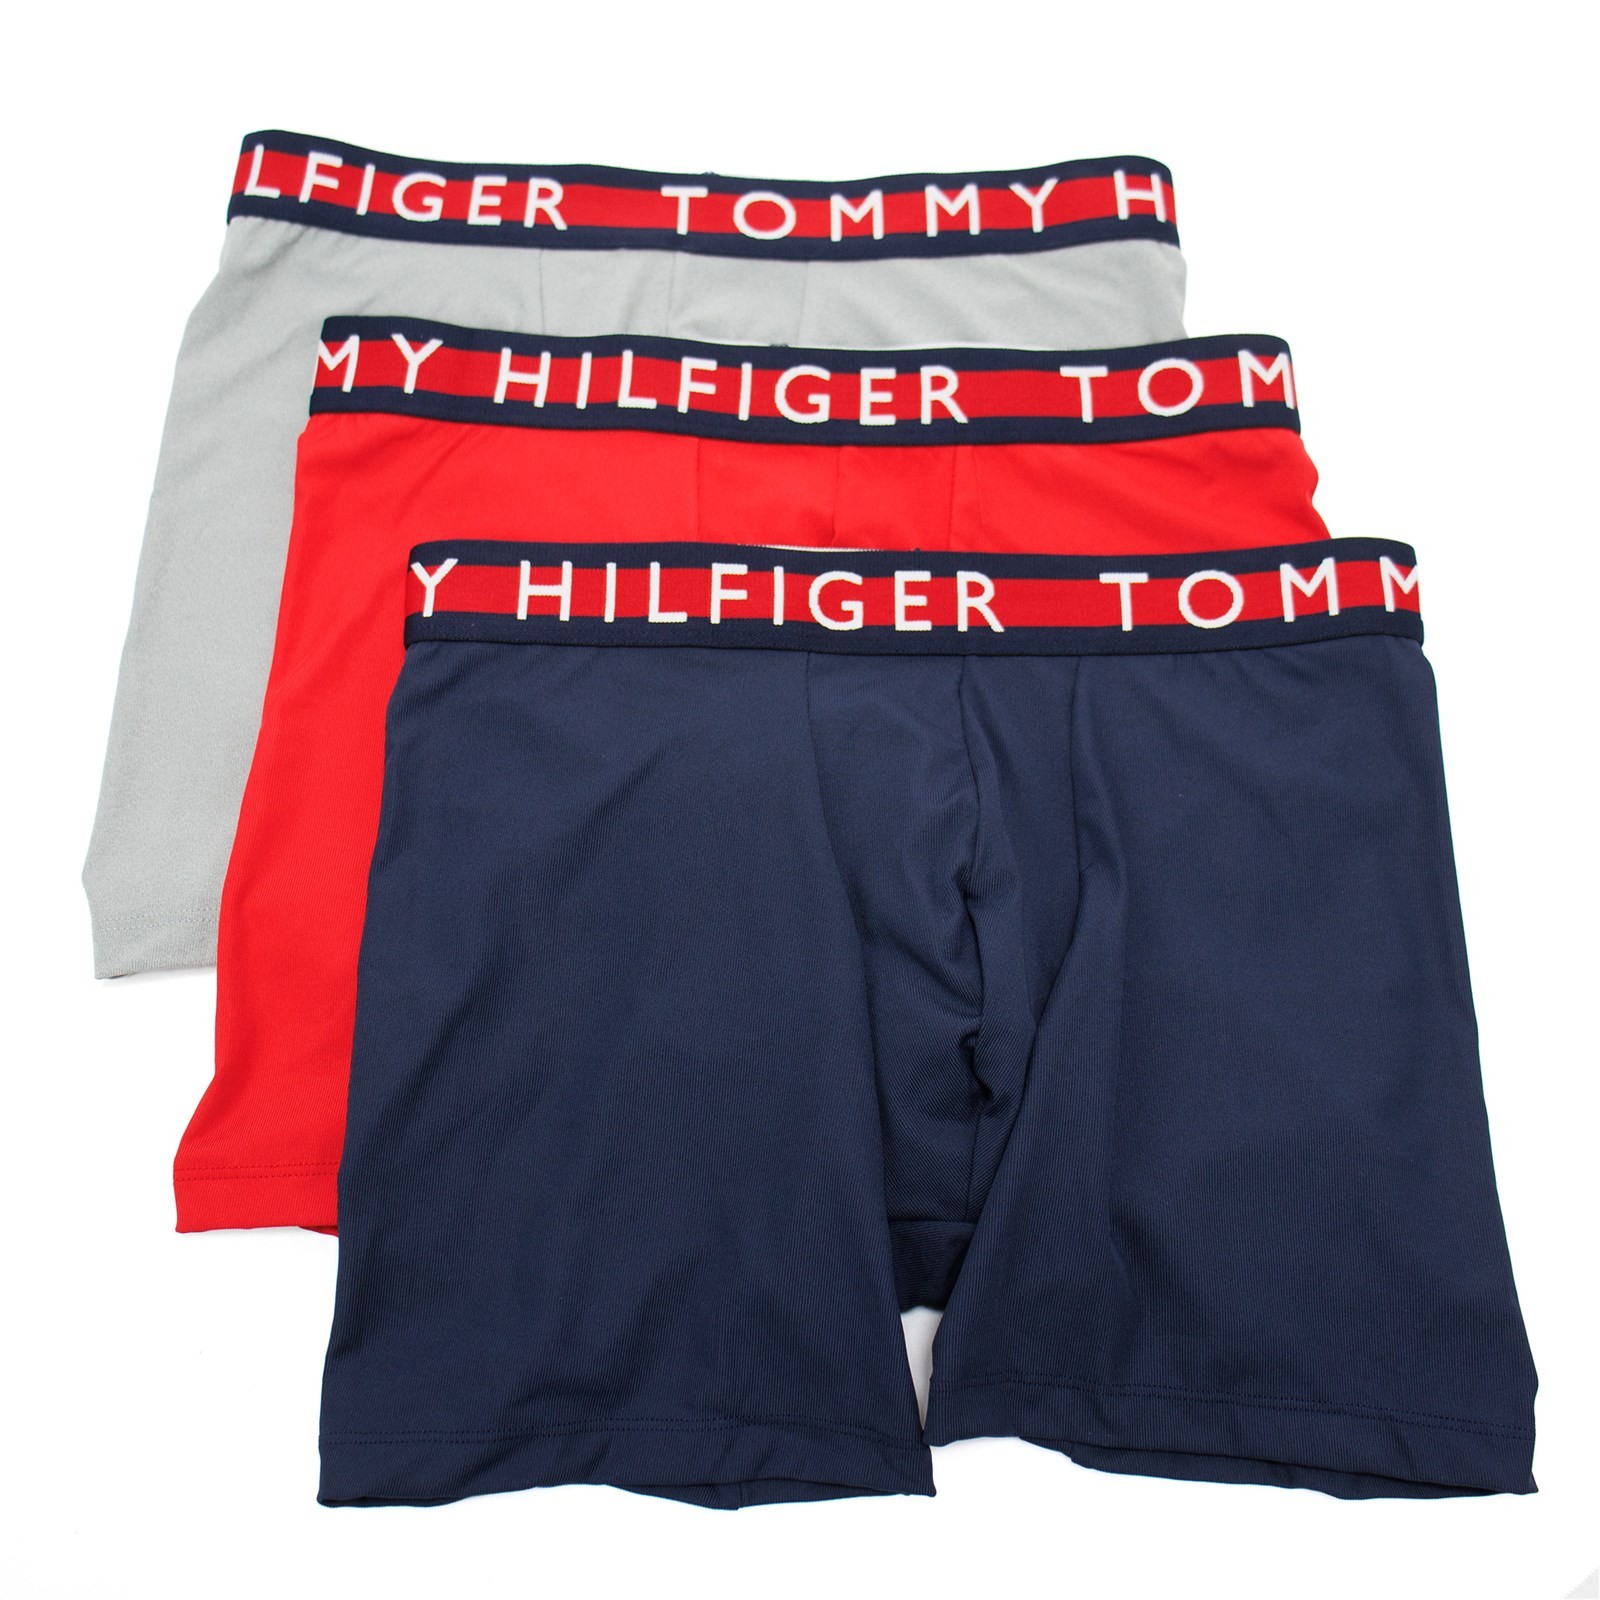 Tommy Hilfiger, 3 Pack Boxer Shorts, Trunks